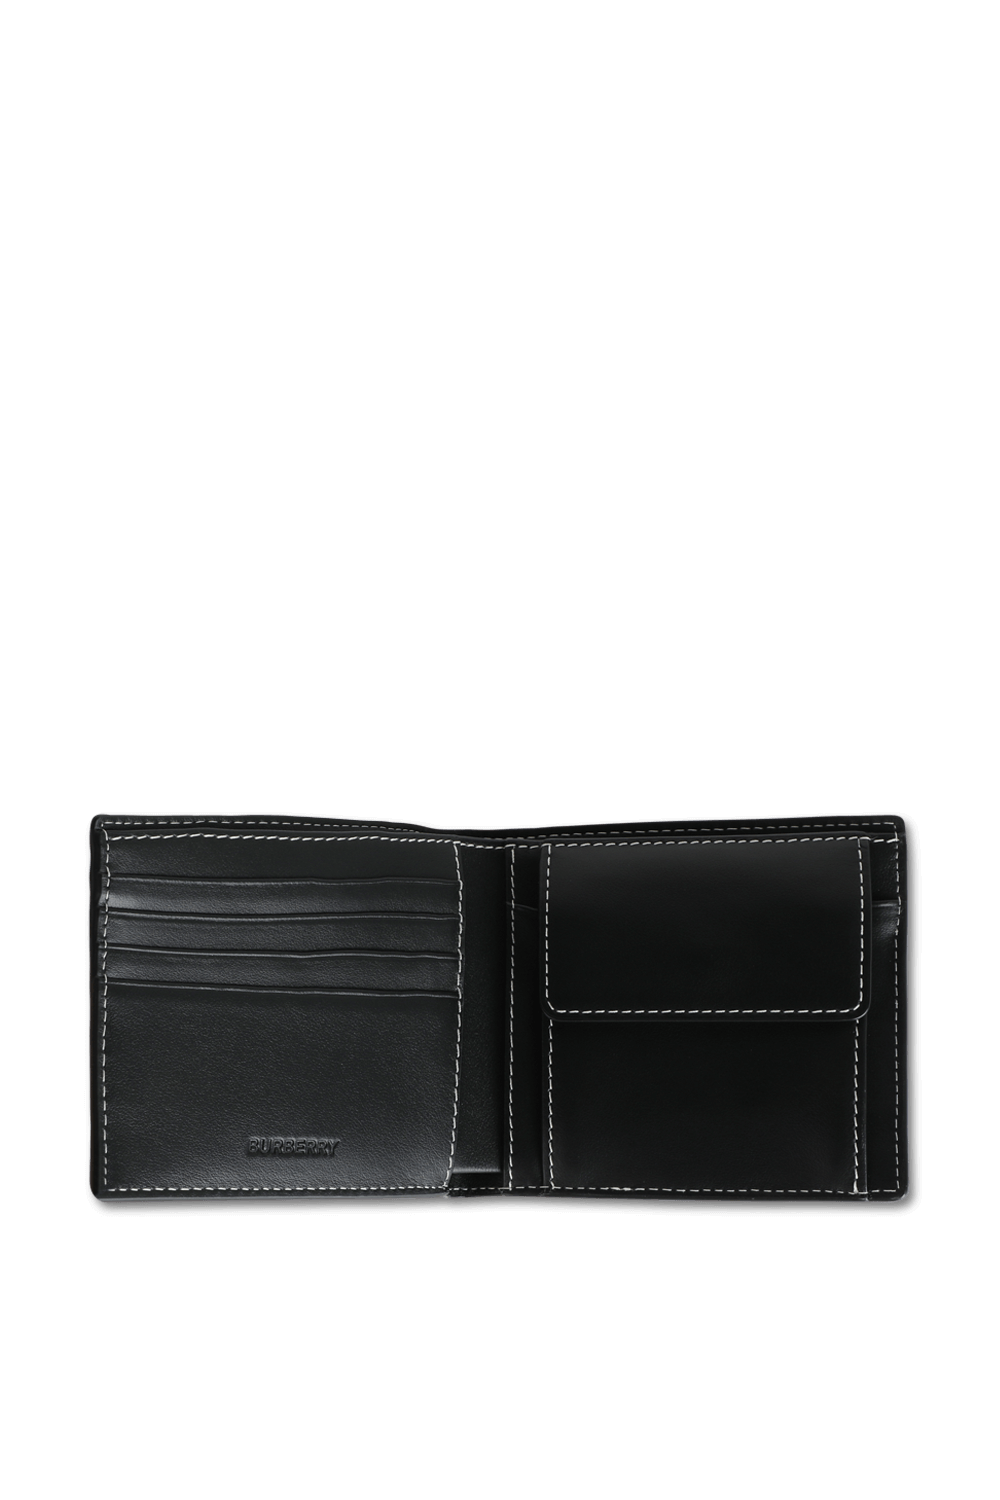 Vintage Check Wallet in Dark Brown BURBERRY